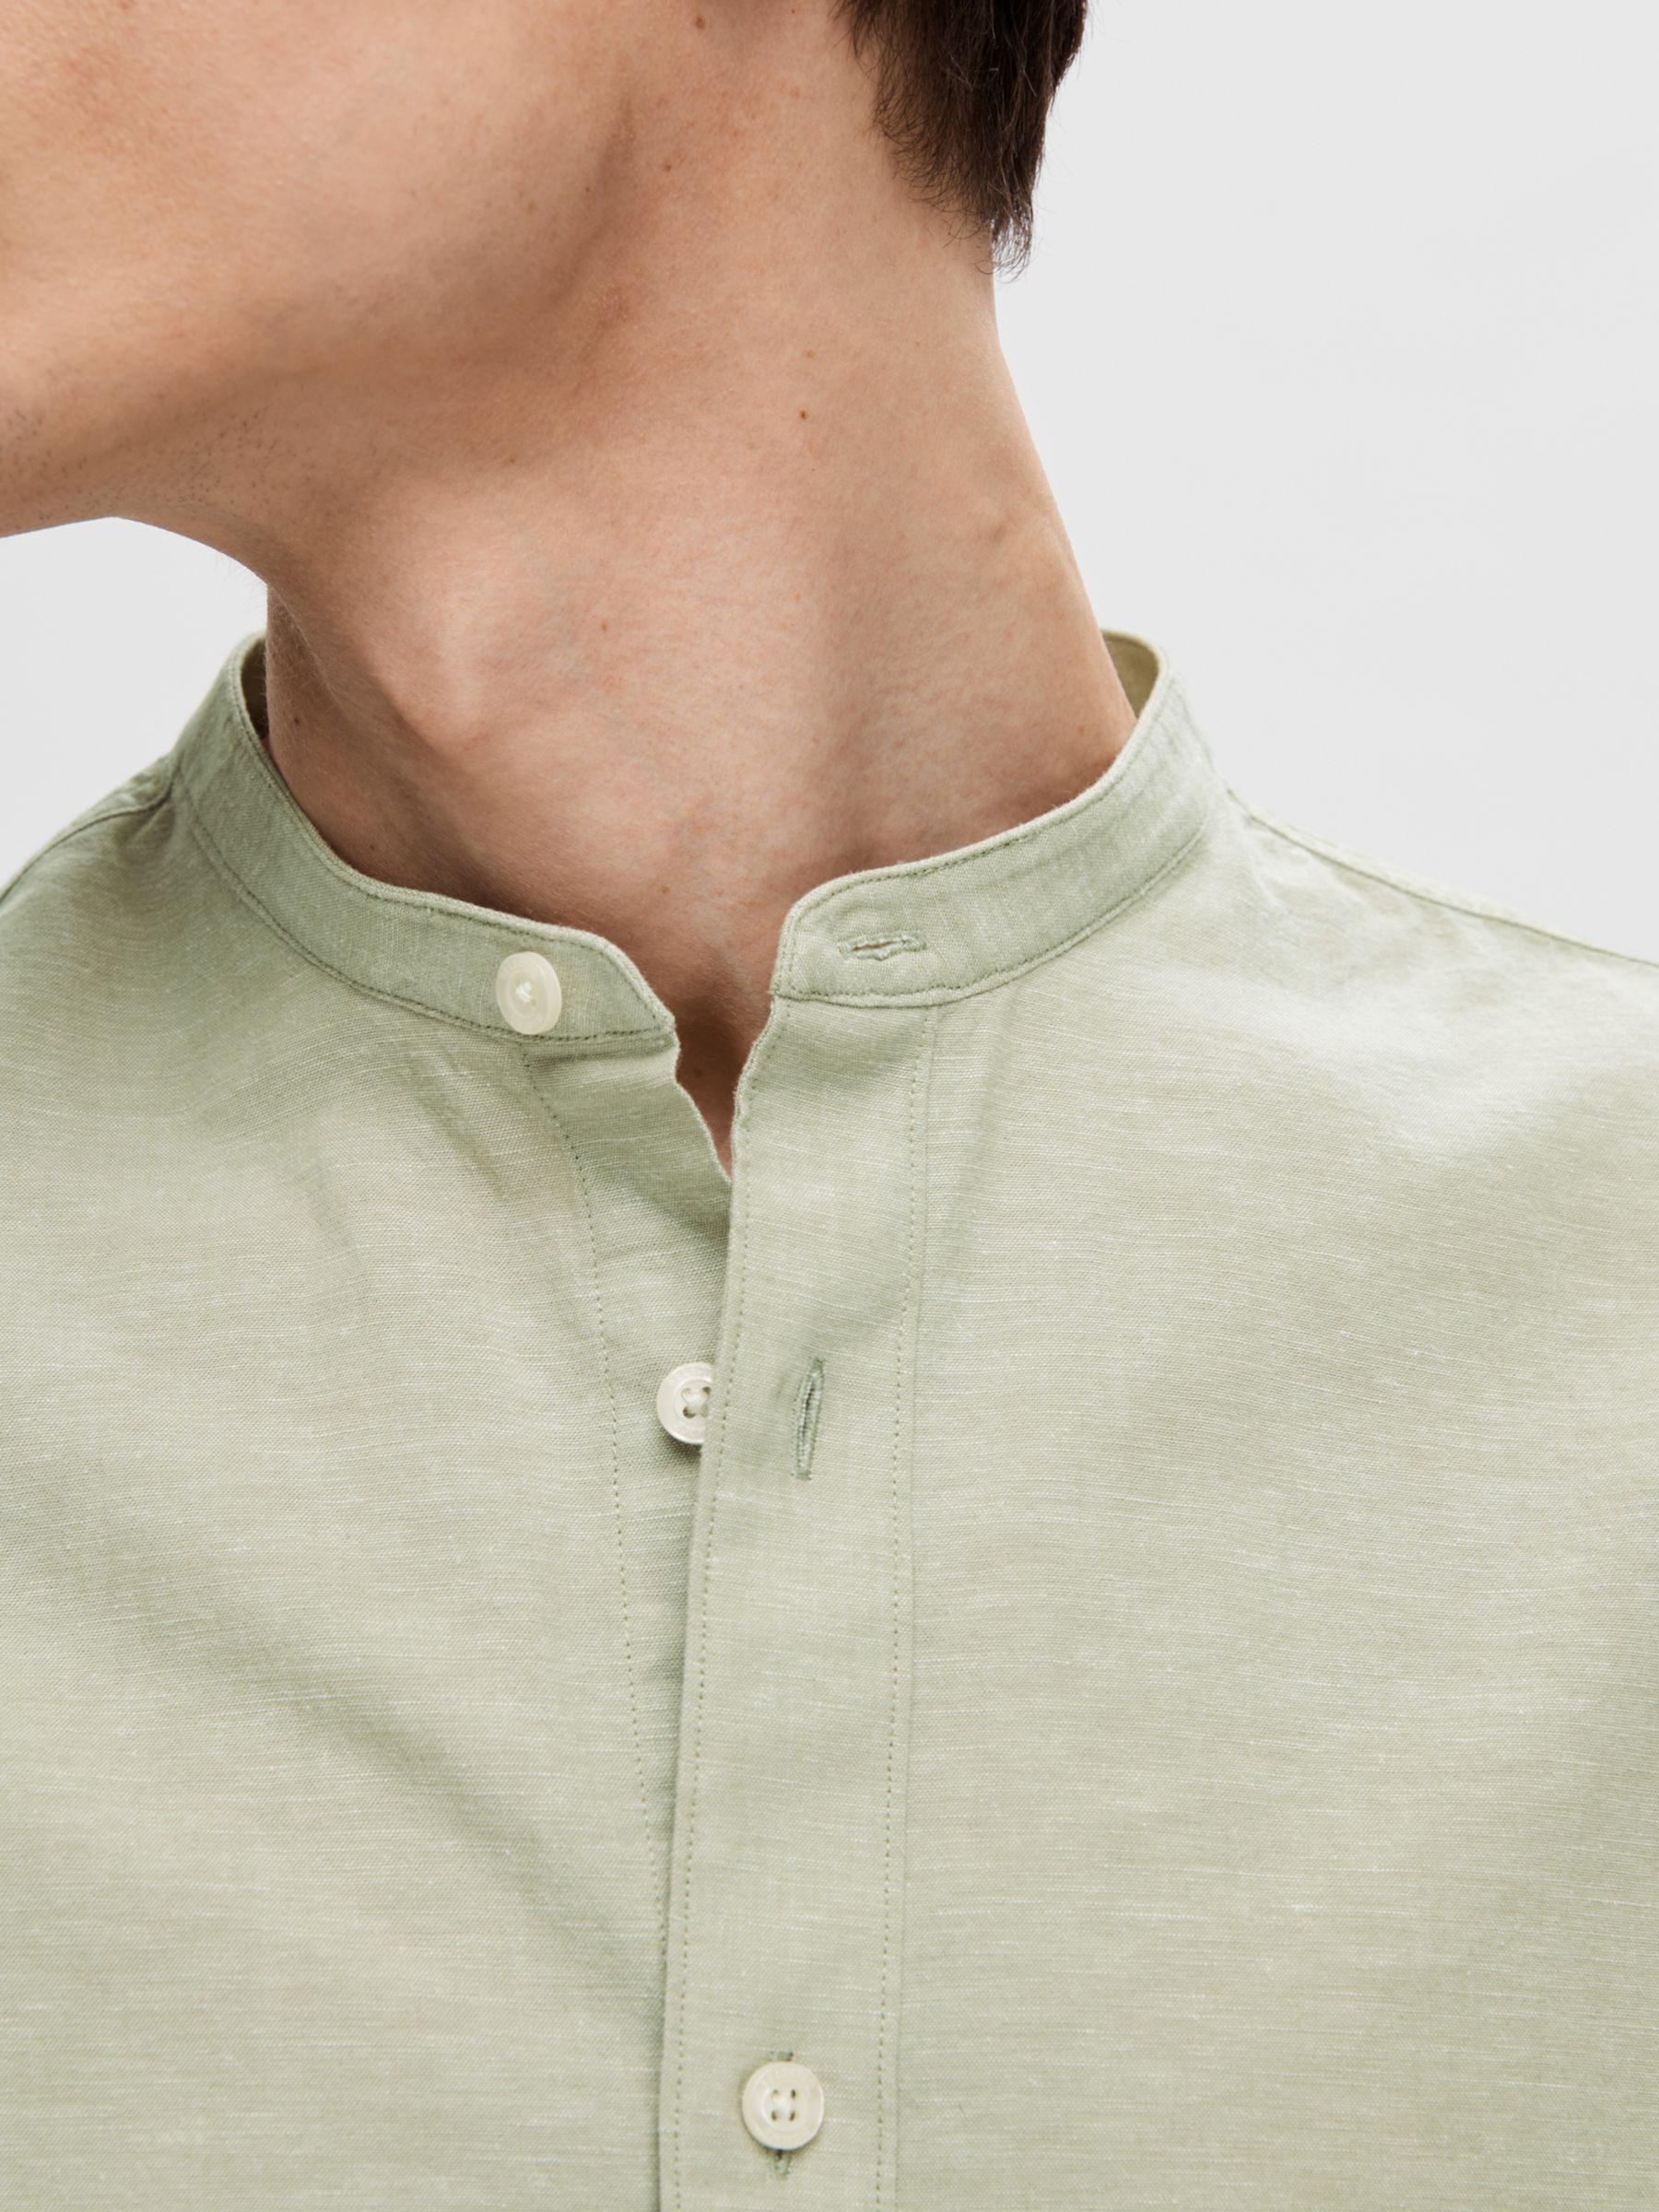 SELECTED HOMME Band Collar Linen Cotton Blend Shirt, Vetiver, S